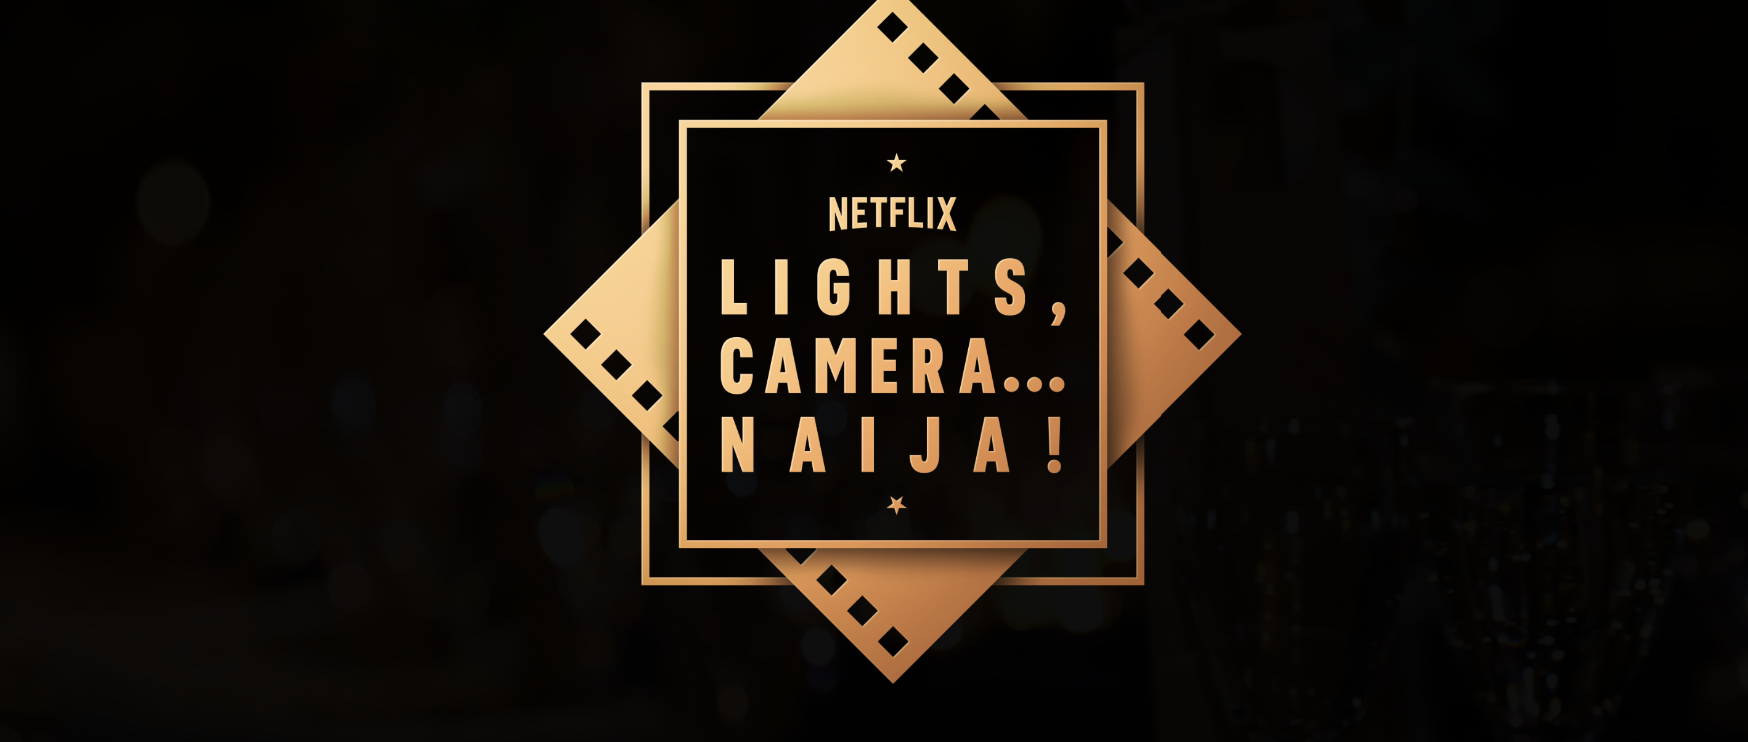 netlfix event  - Lights, Camera..Naija: Netflix Hosts Nigerian Film/TV Stars at Exclusive Gala Event